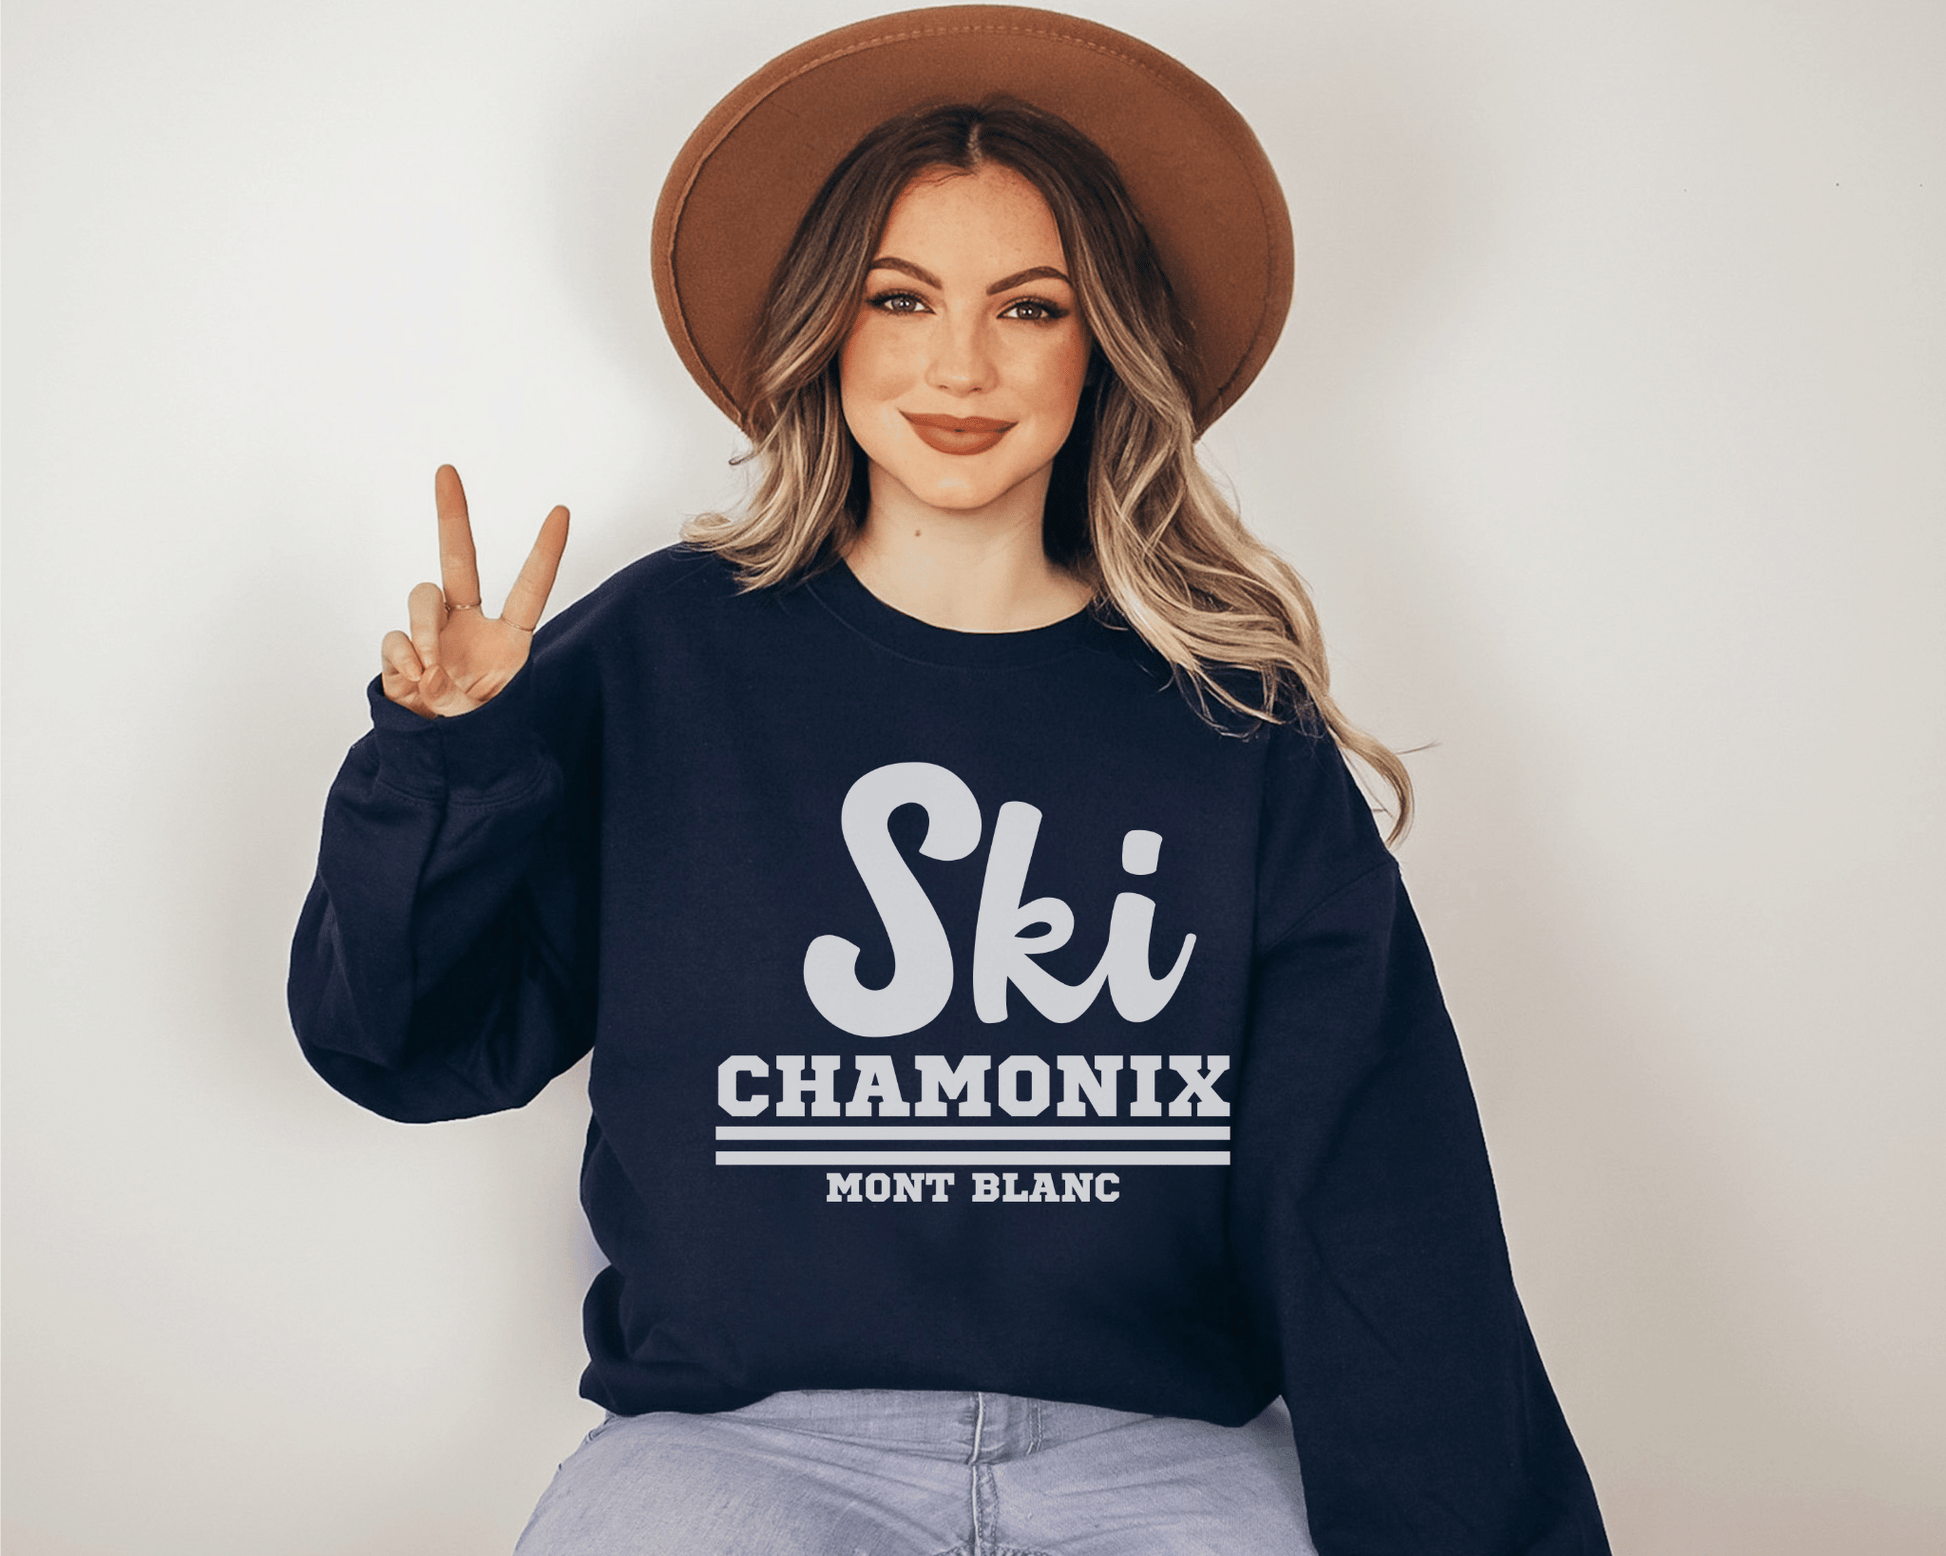 Ski Chamonix Sweatshirt in Navy on a female model.